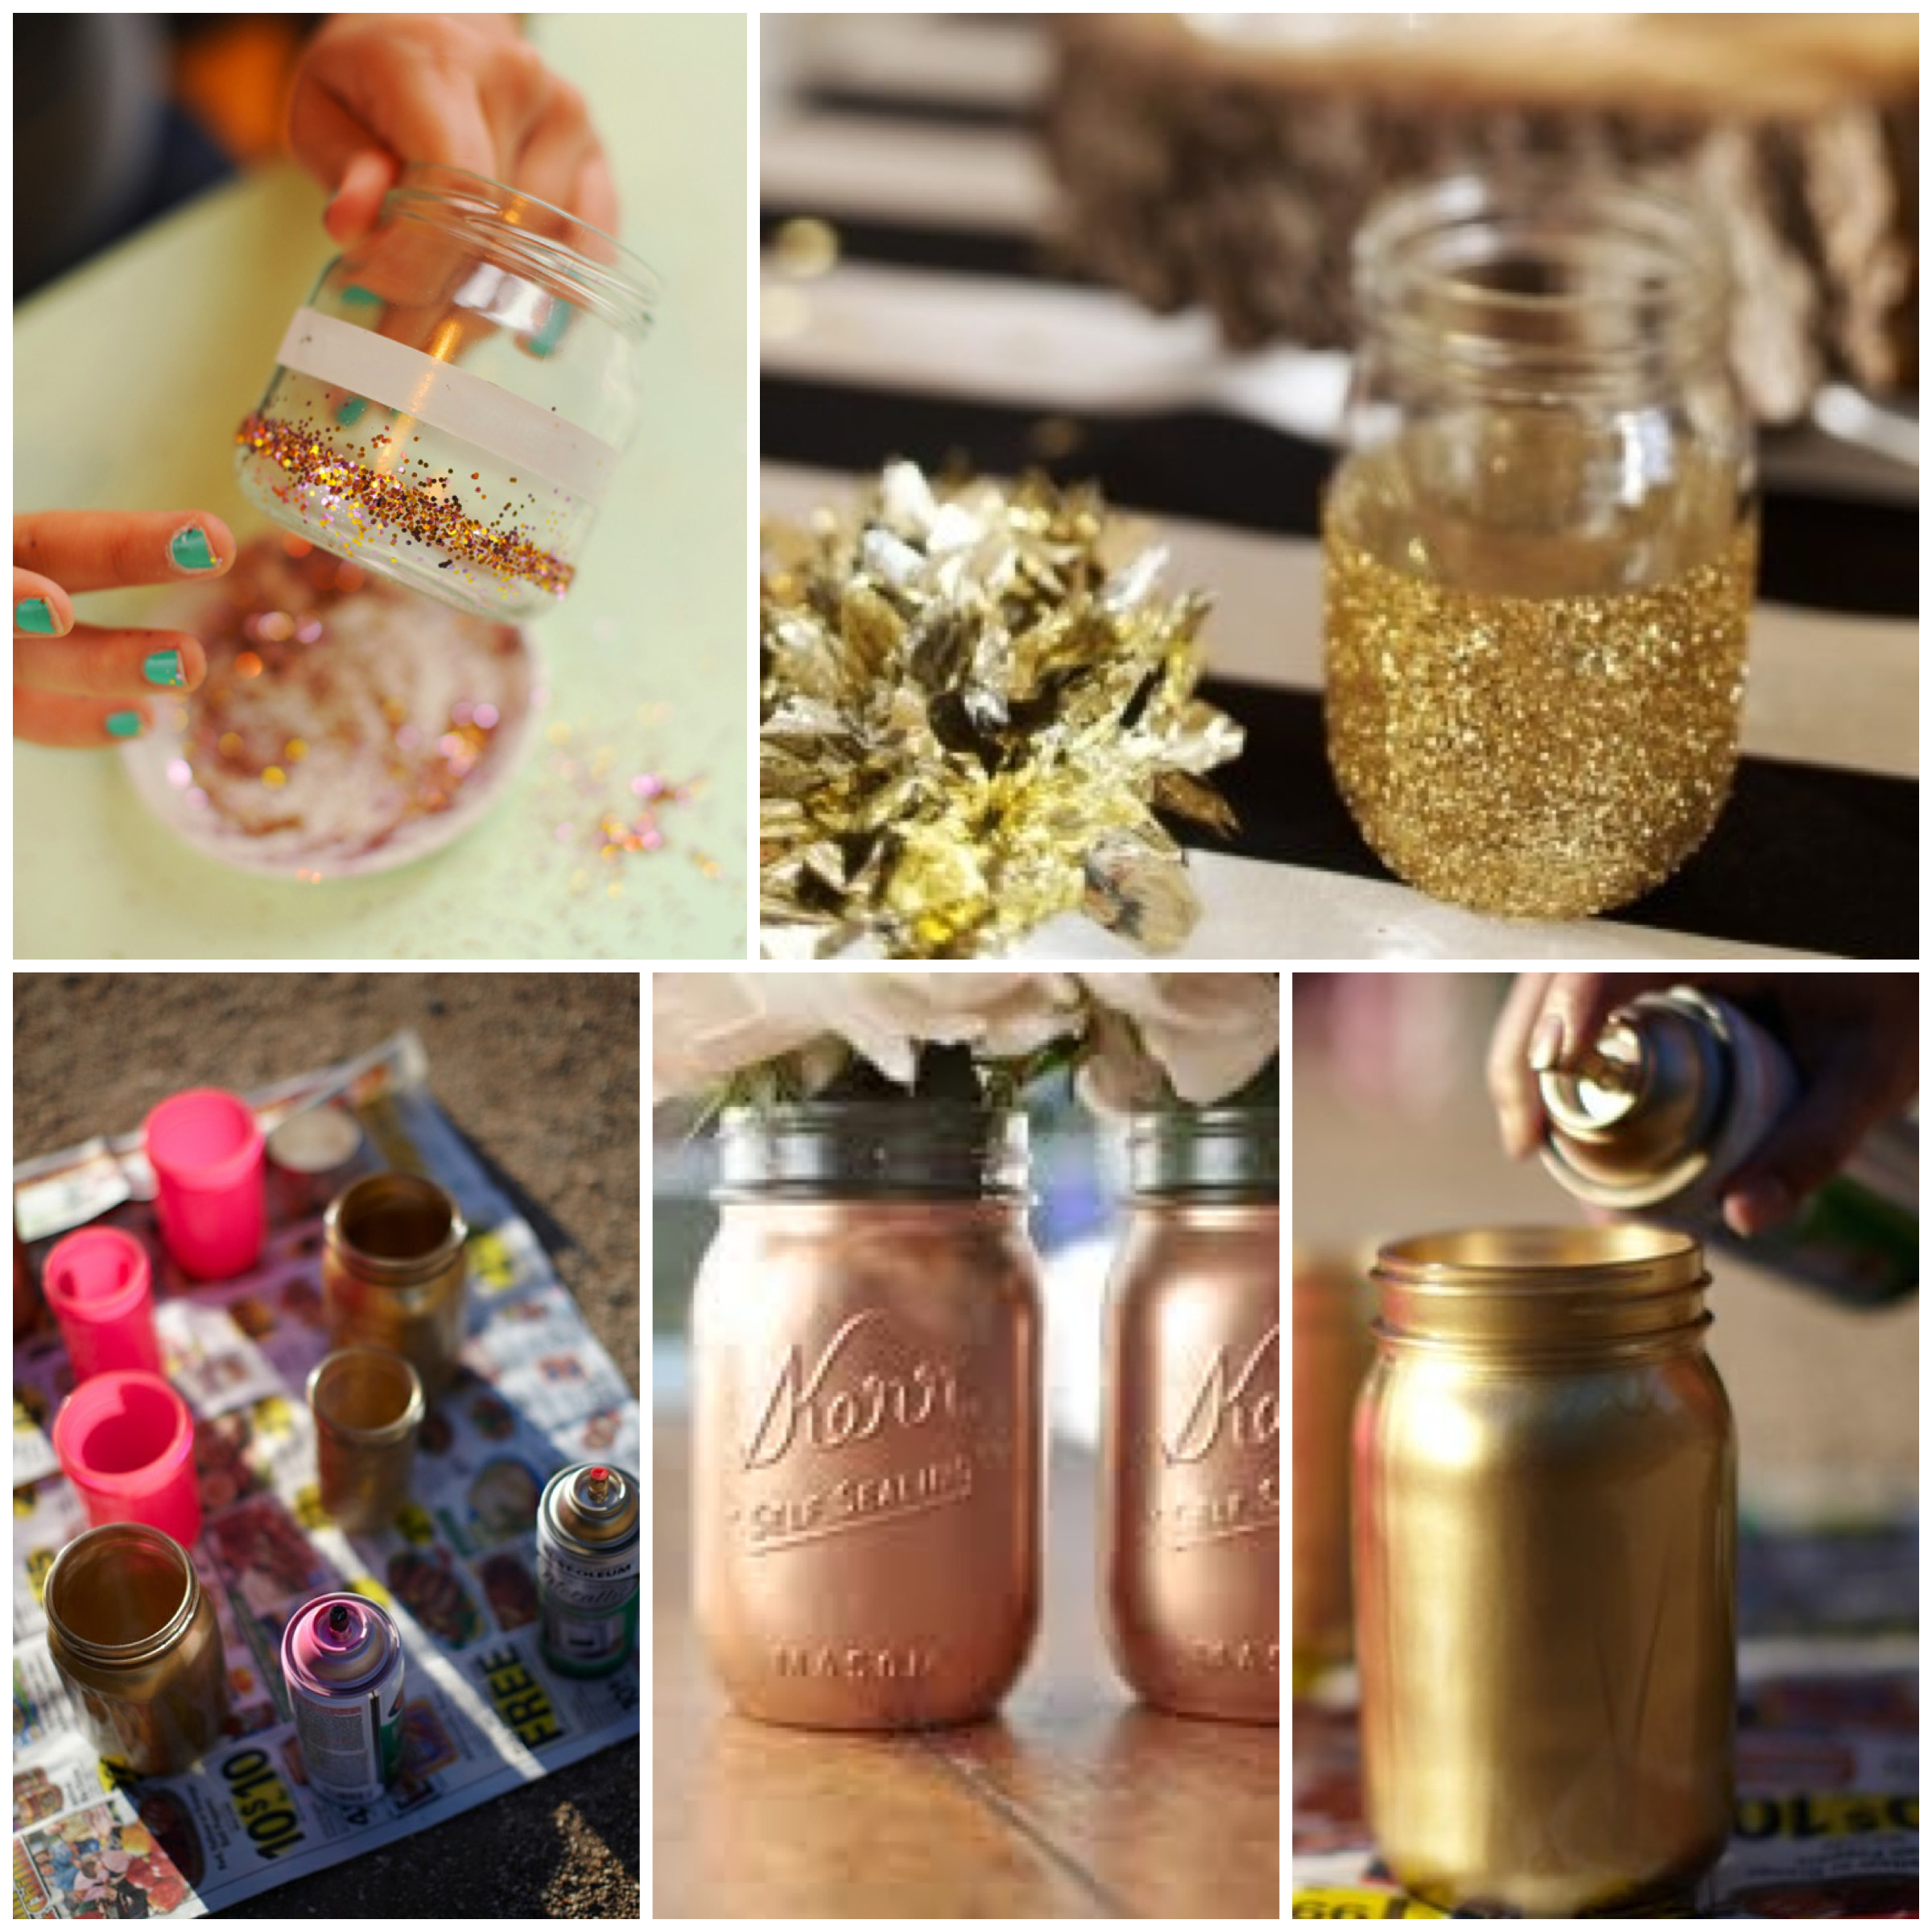 Best ideas about Mason Jar DIY
. Save or Pin DIY Gold Mason Jars Now.